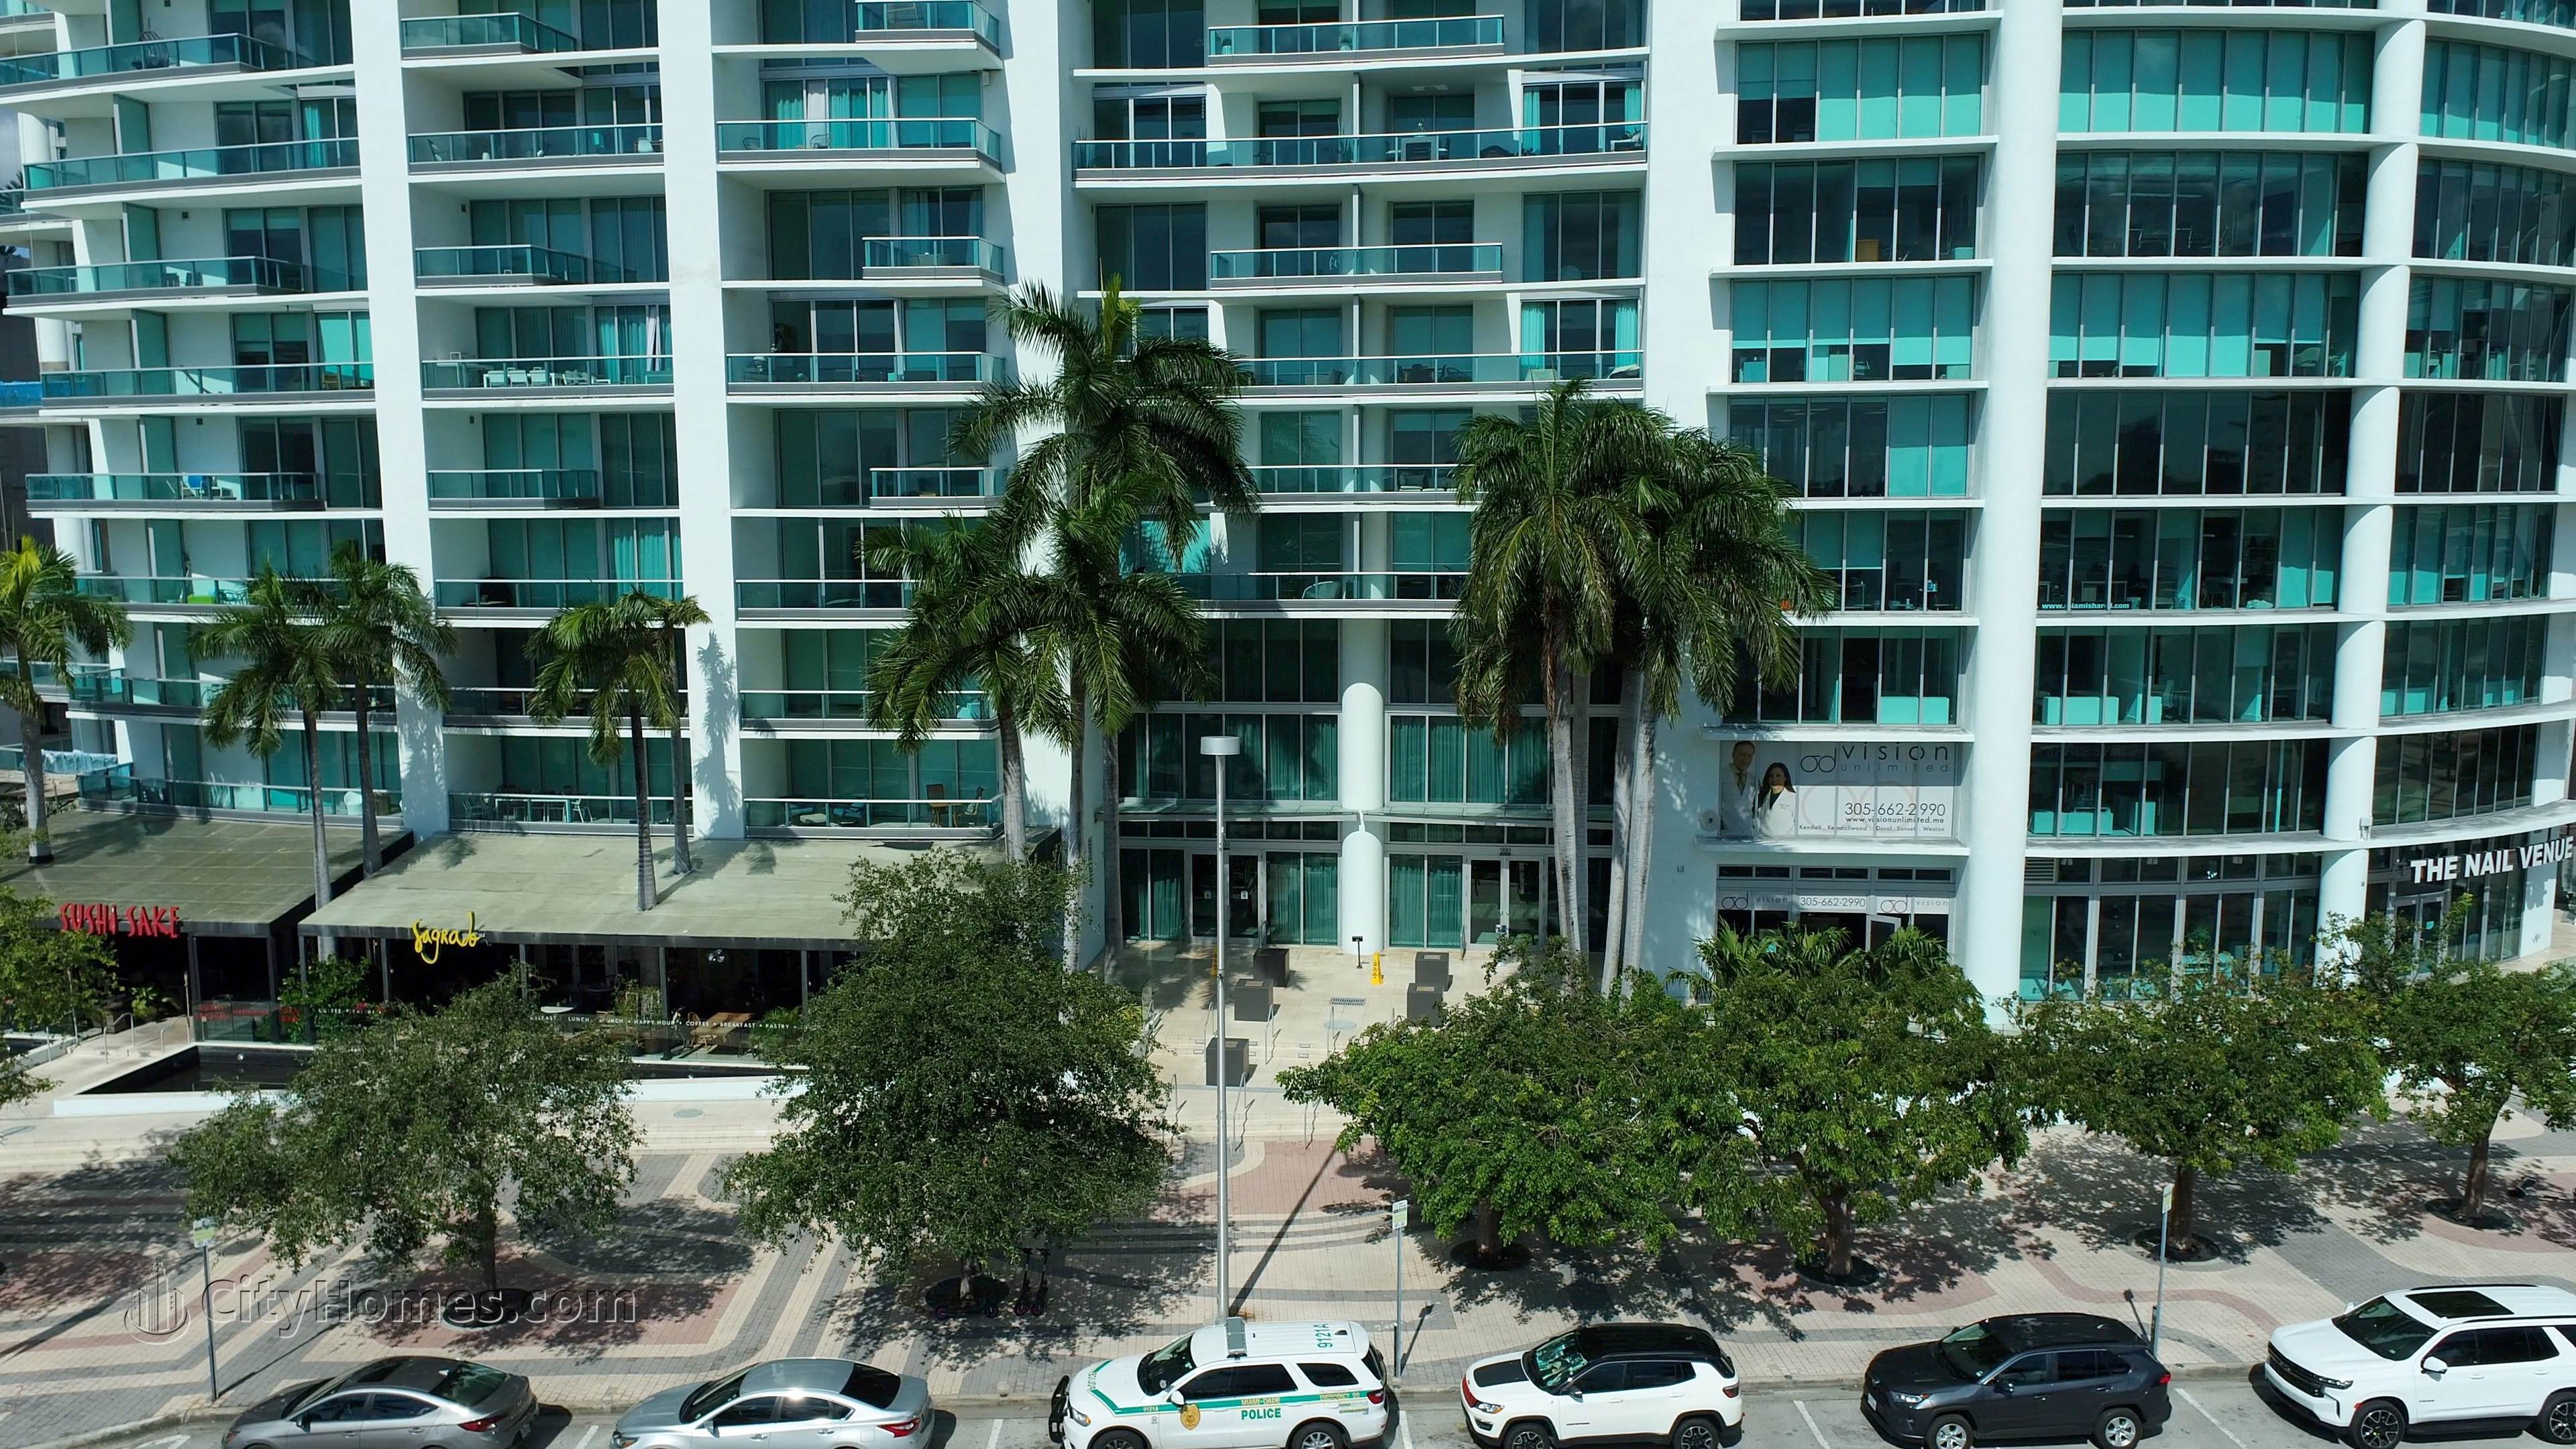 6. 900 Biscayne Bay建於 900 Biscayne Boulevard, Miami, FL 33132